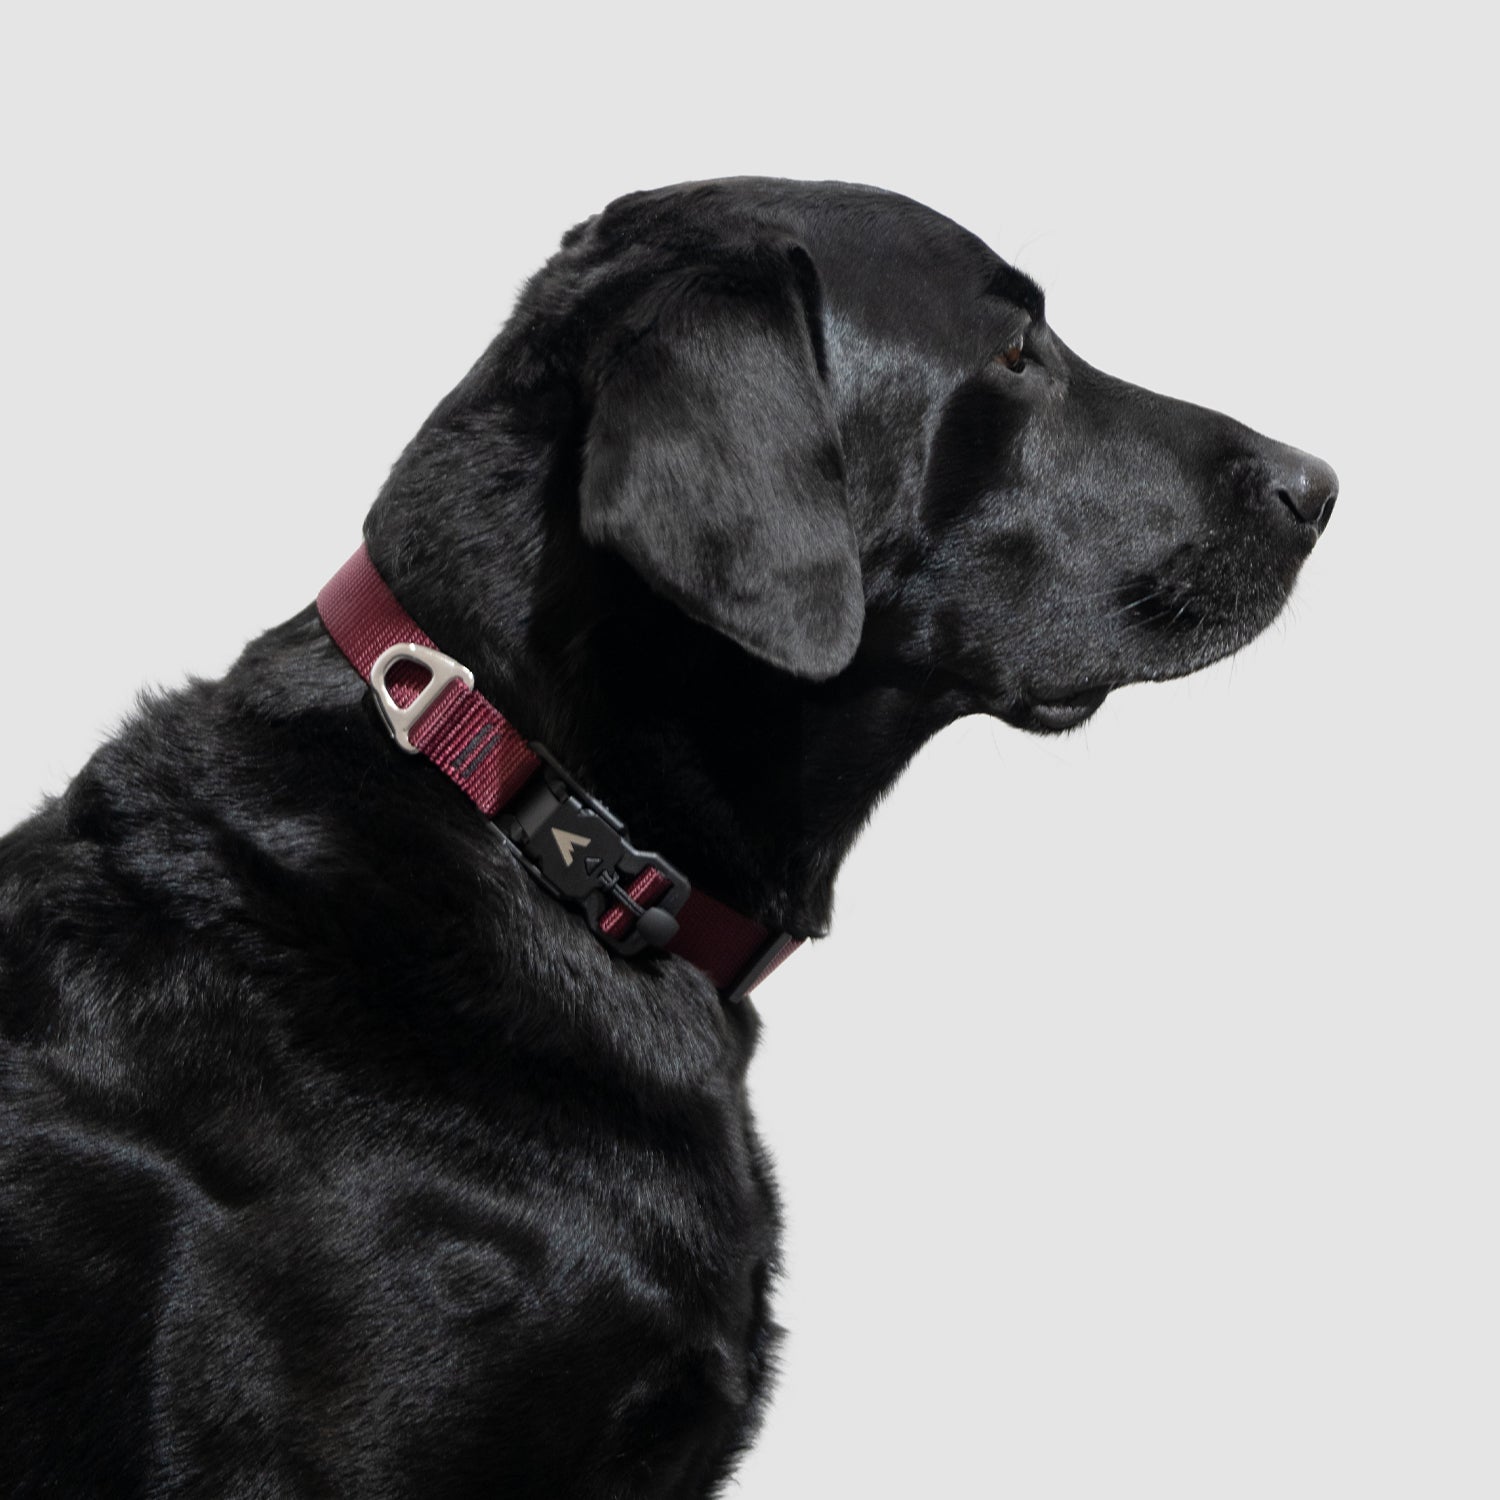 atlas pet company lifetime lite collar adjustable lifetime warranty dog collar with traditional fit --maroon